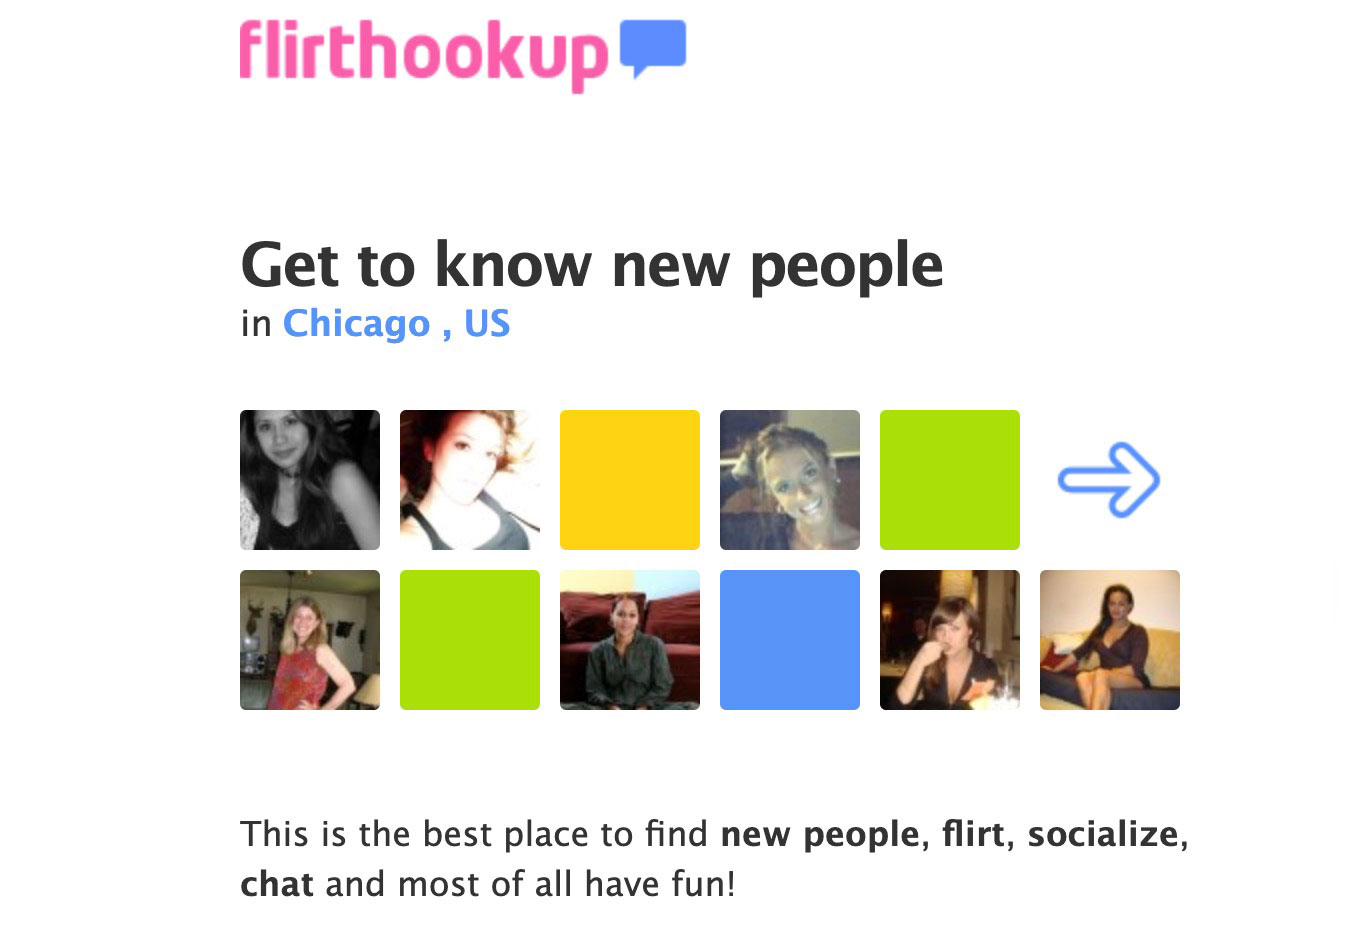 FlirtHookup main page